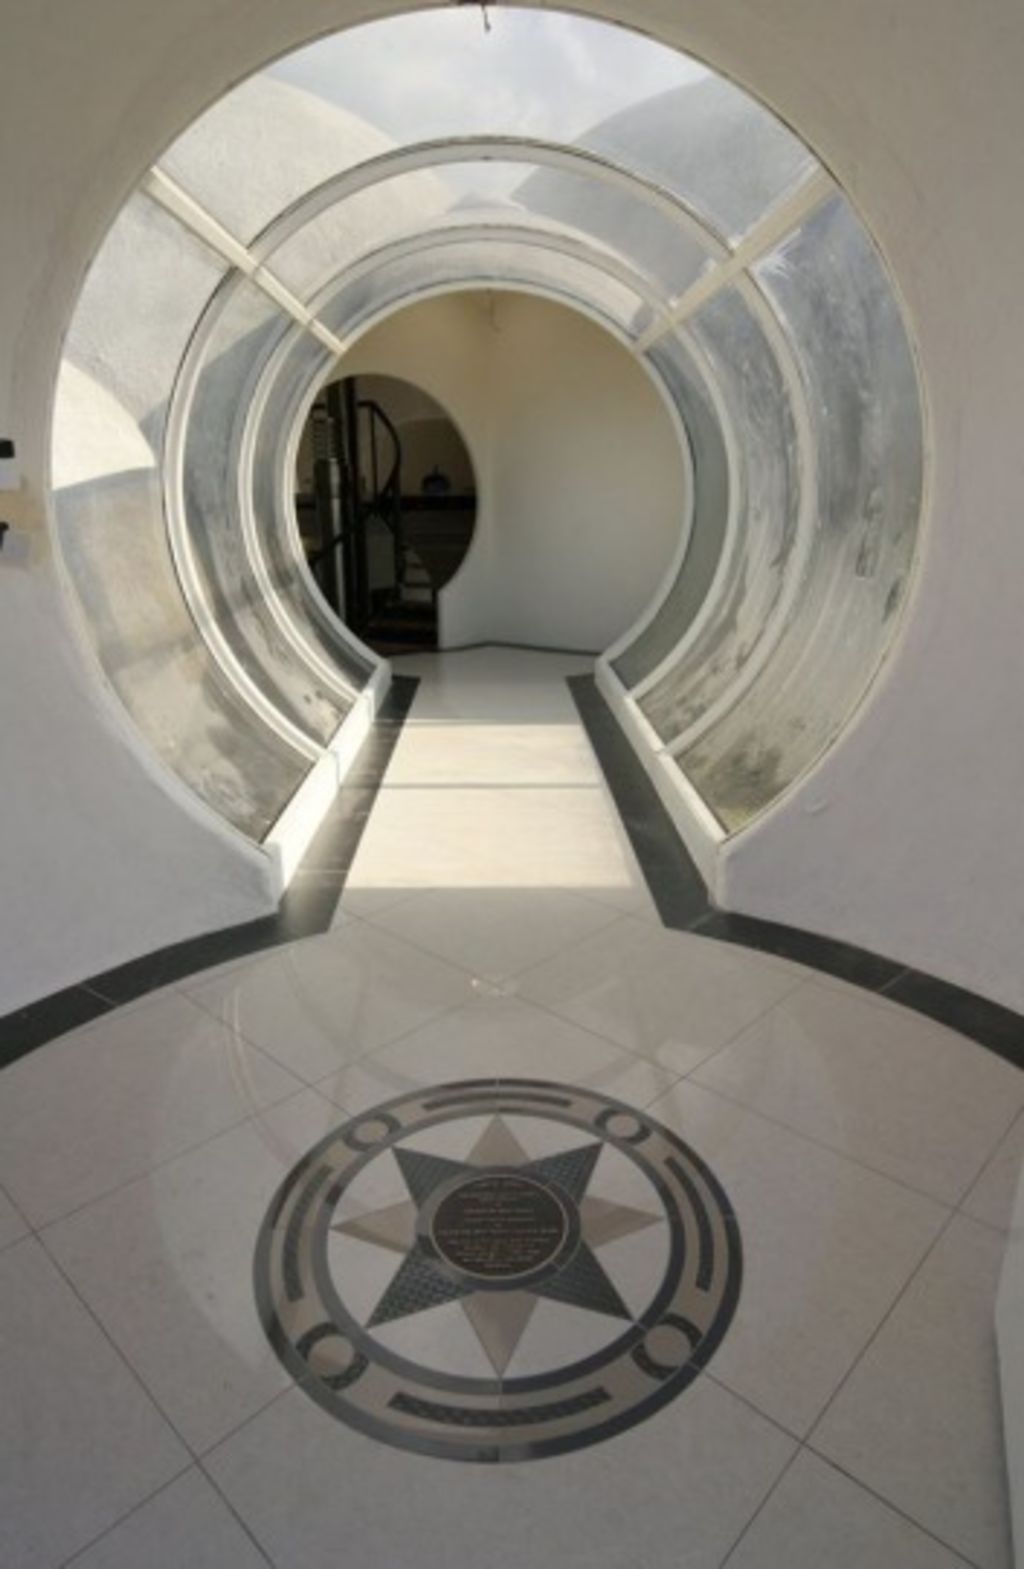 A corridor inside the bubble house. Photo: Supplied